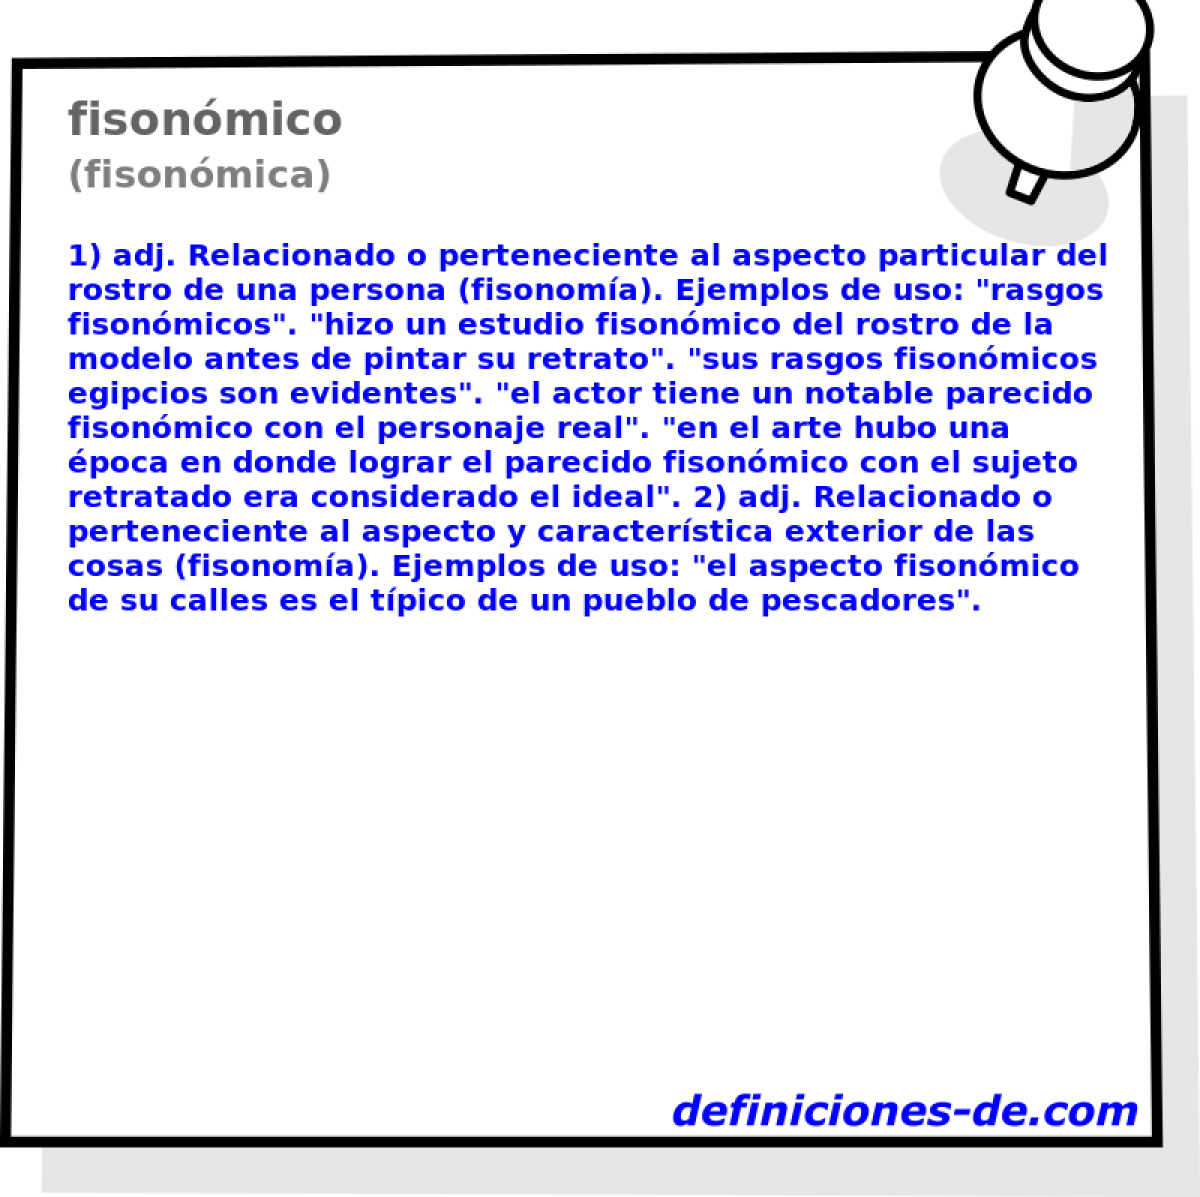 fisonmico (fisonmica)